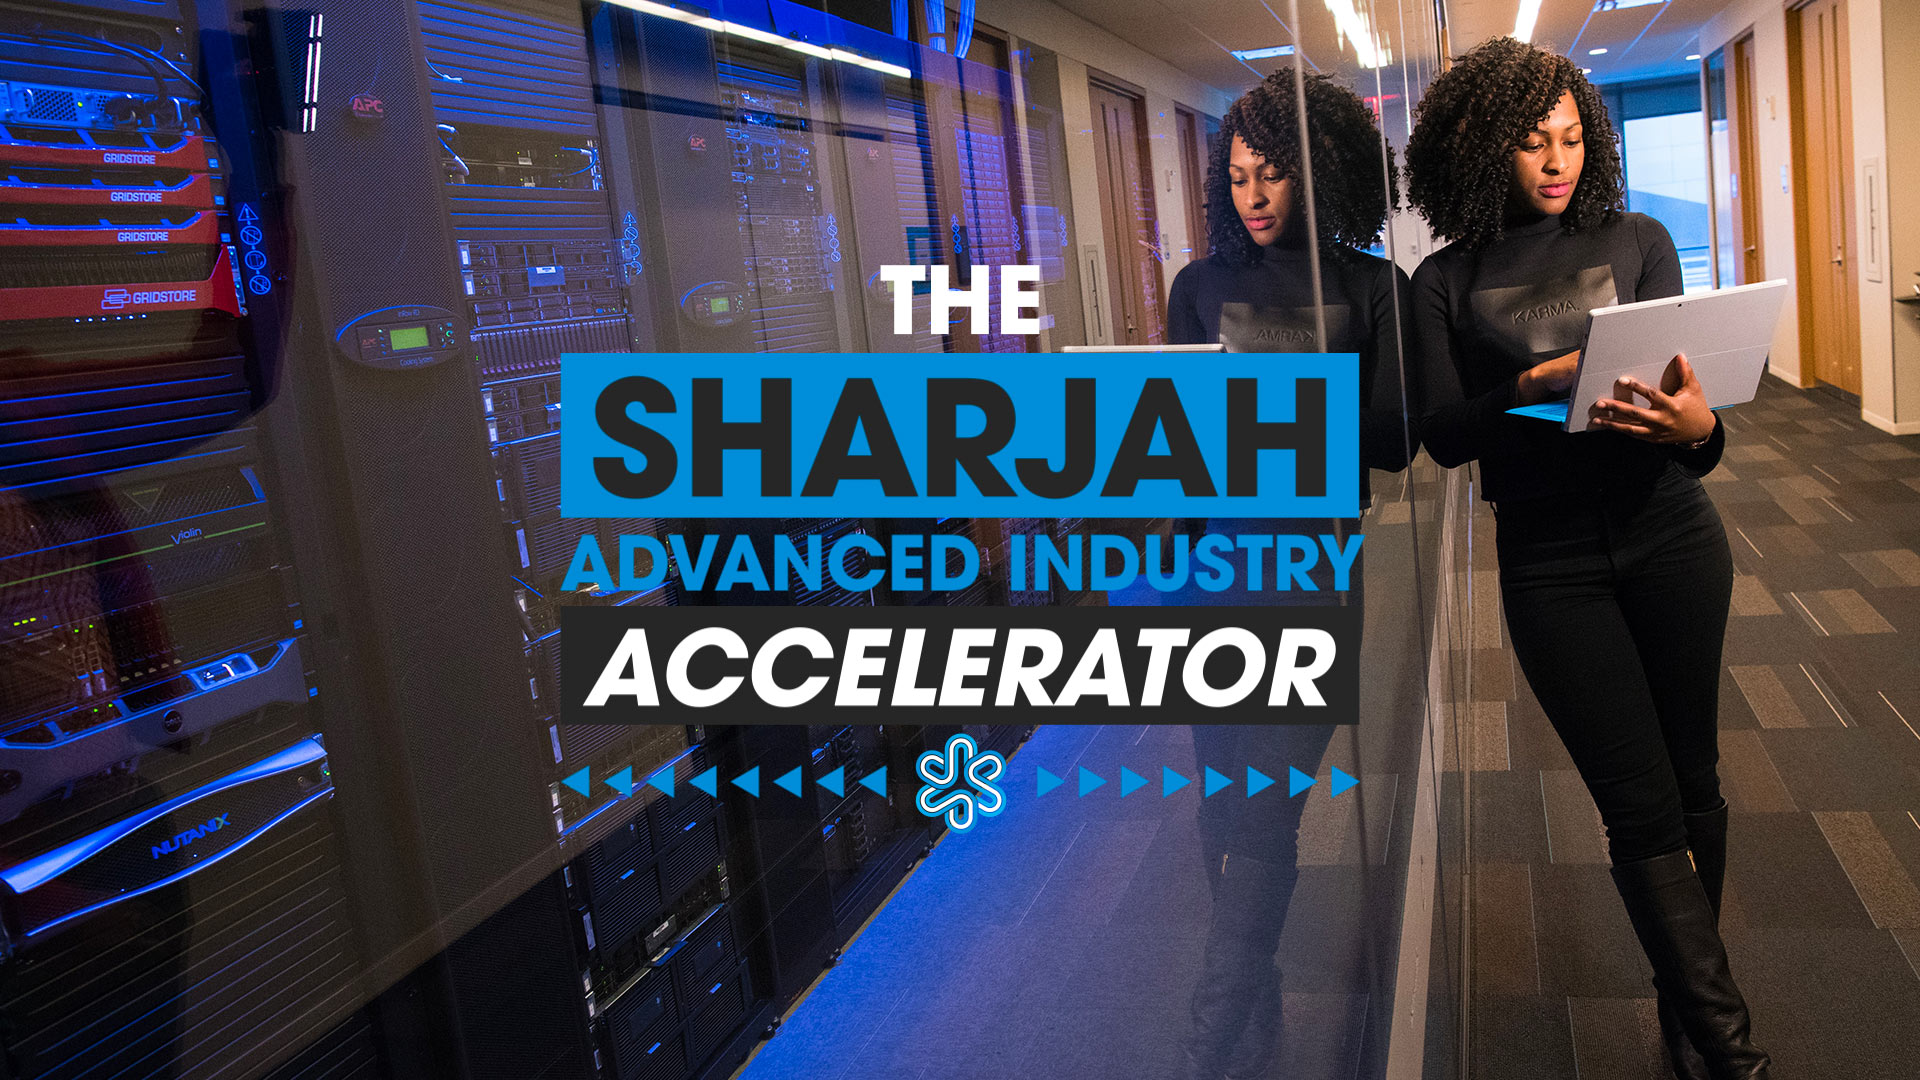 Sharjah Advanced Industry Accelerator